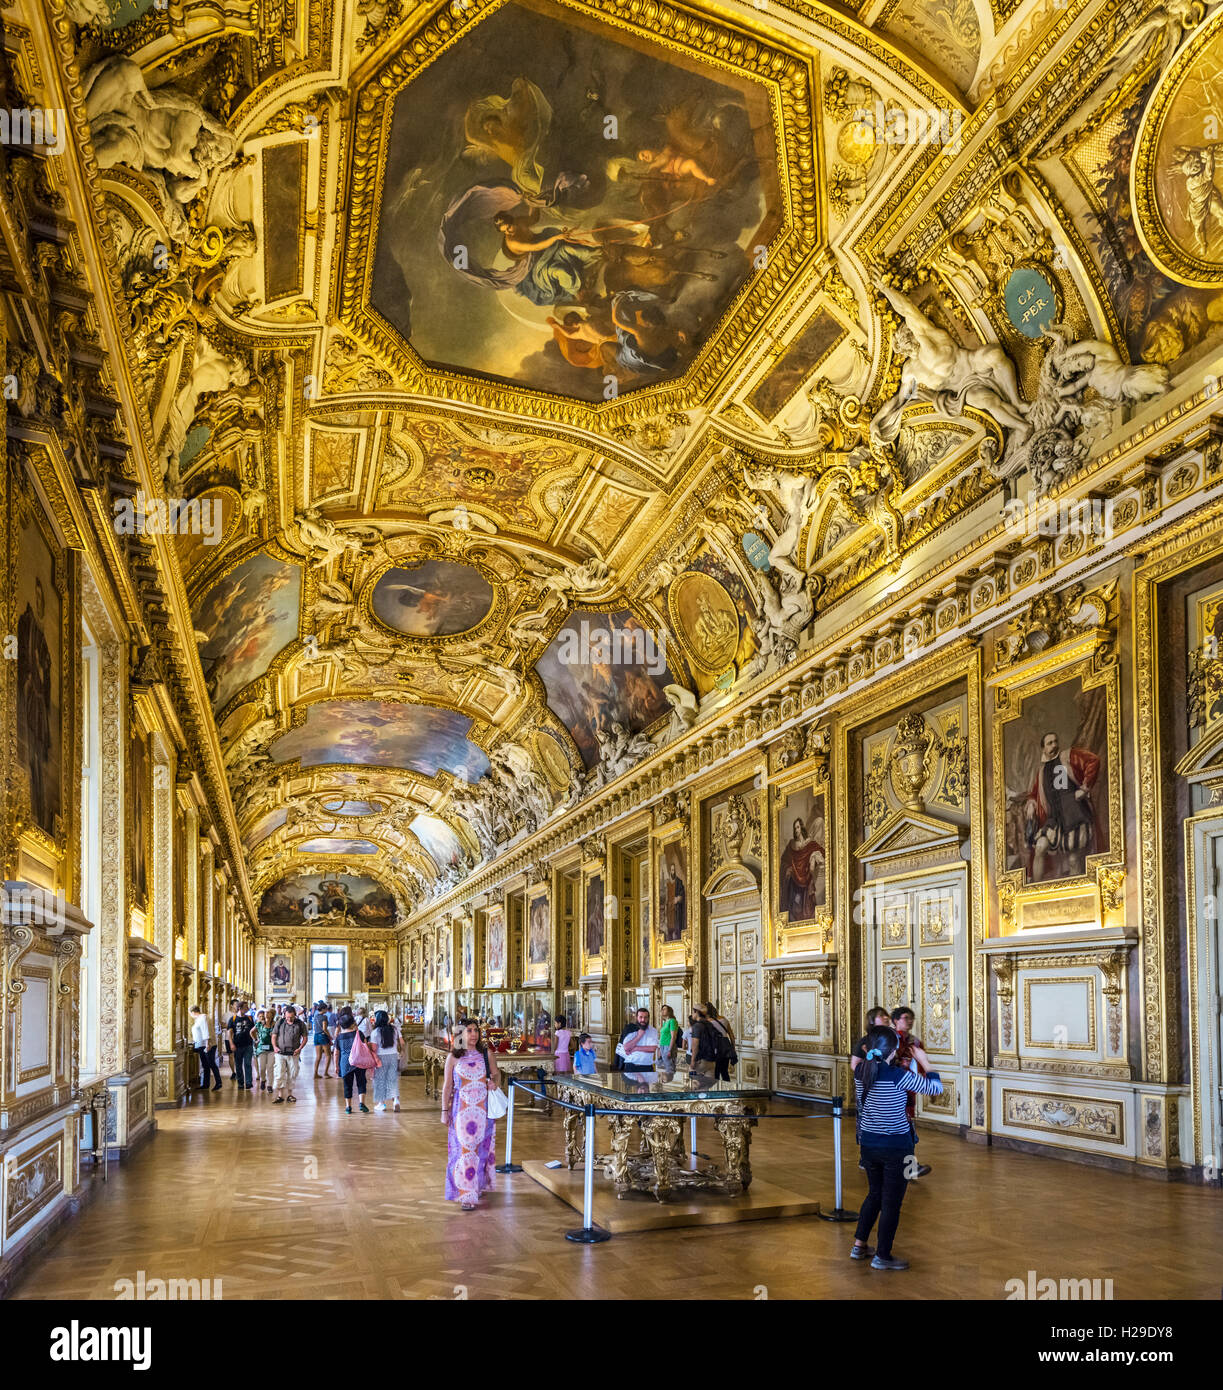 Louvre interior. La Galerie d'Apollon (Apollo Gallery), designed in 1661 by Louis Le Vau and Charles Le Brun to glorify King Louis XIV, Musee du Louvre, Paris, France Stock Photo